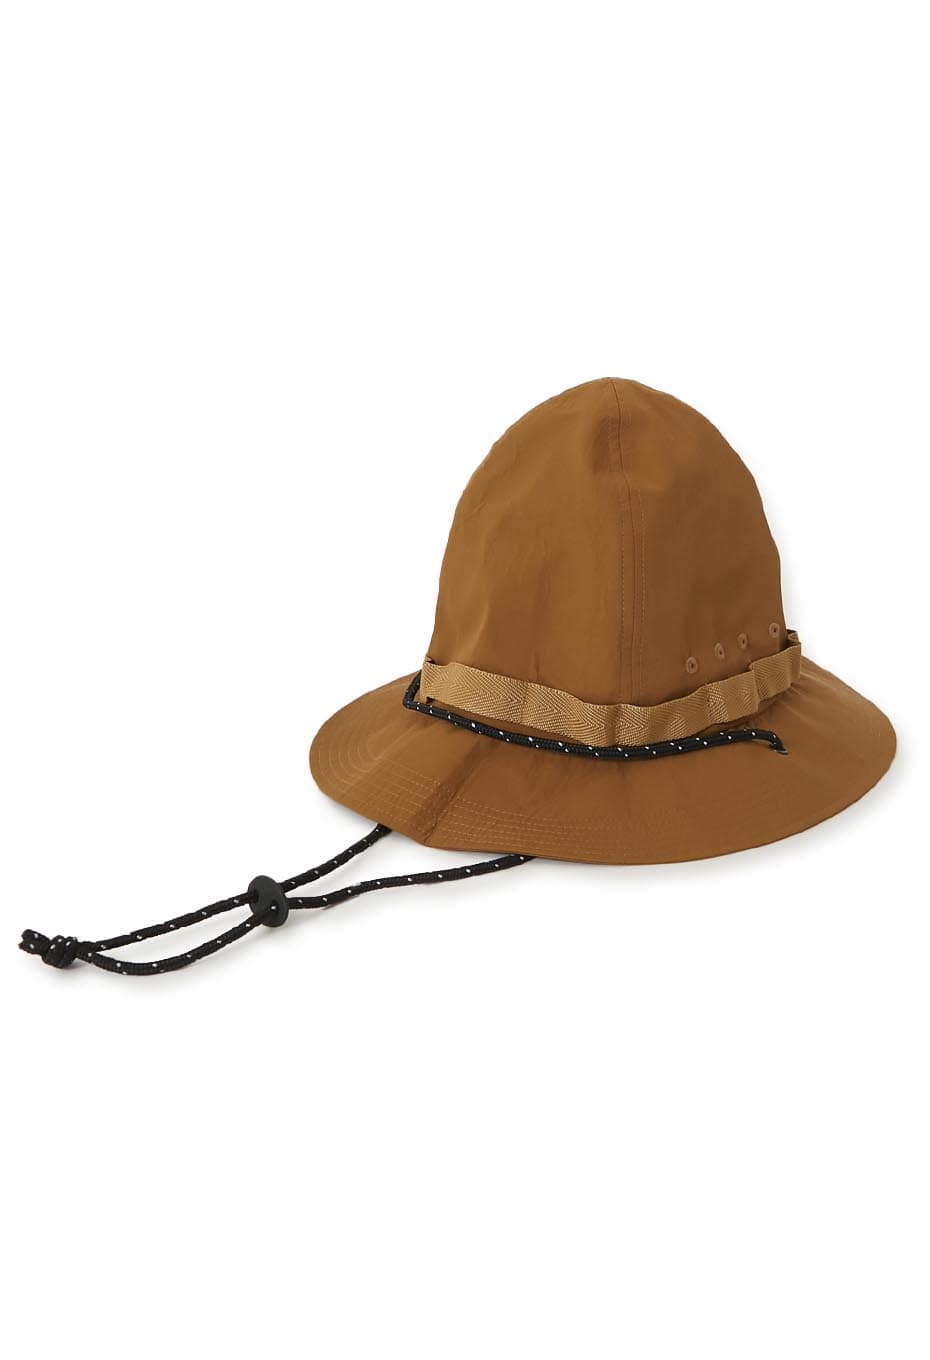 norbit seam bush hat